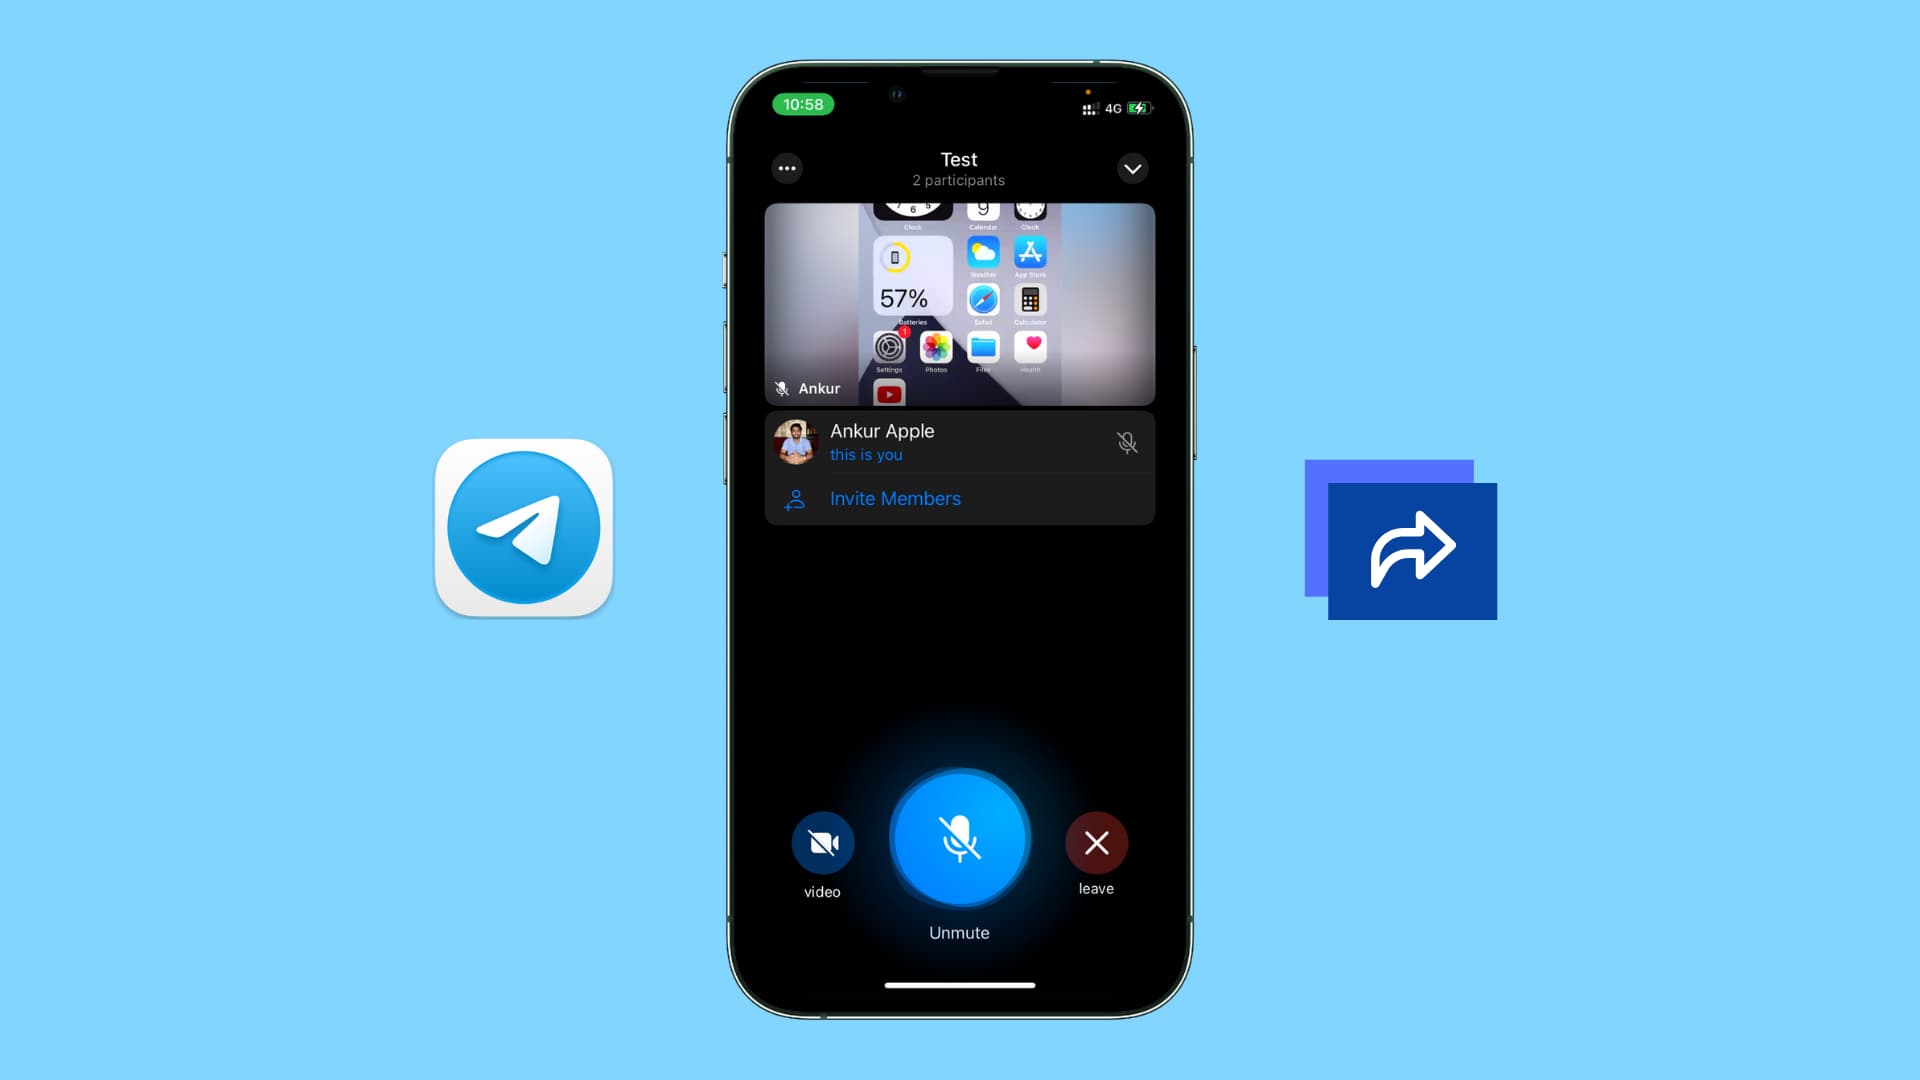 iPhone showing screen sharing on Telegram